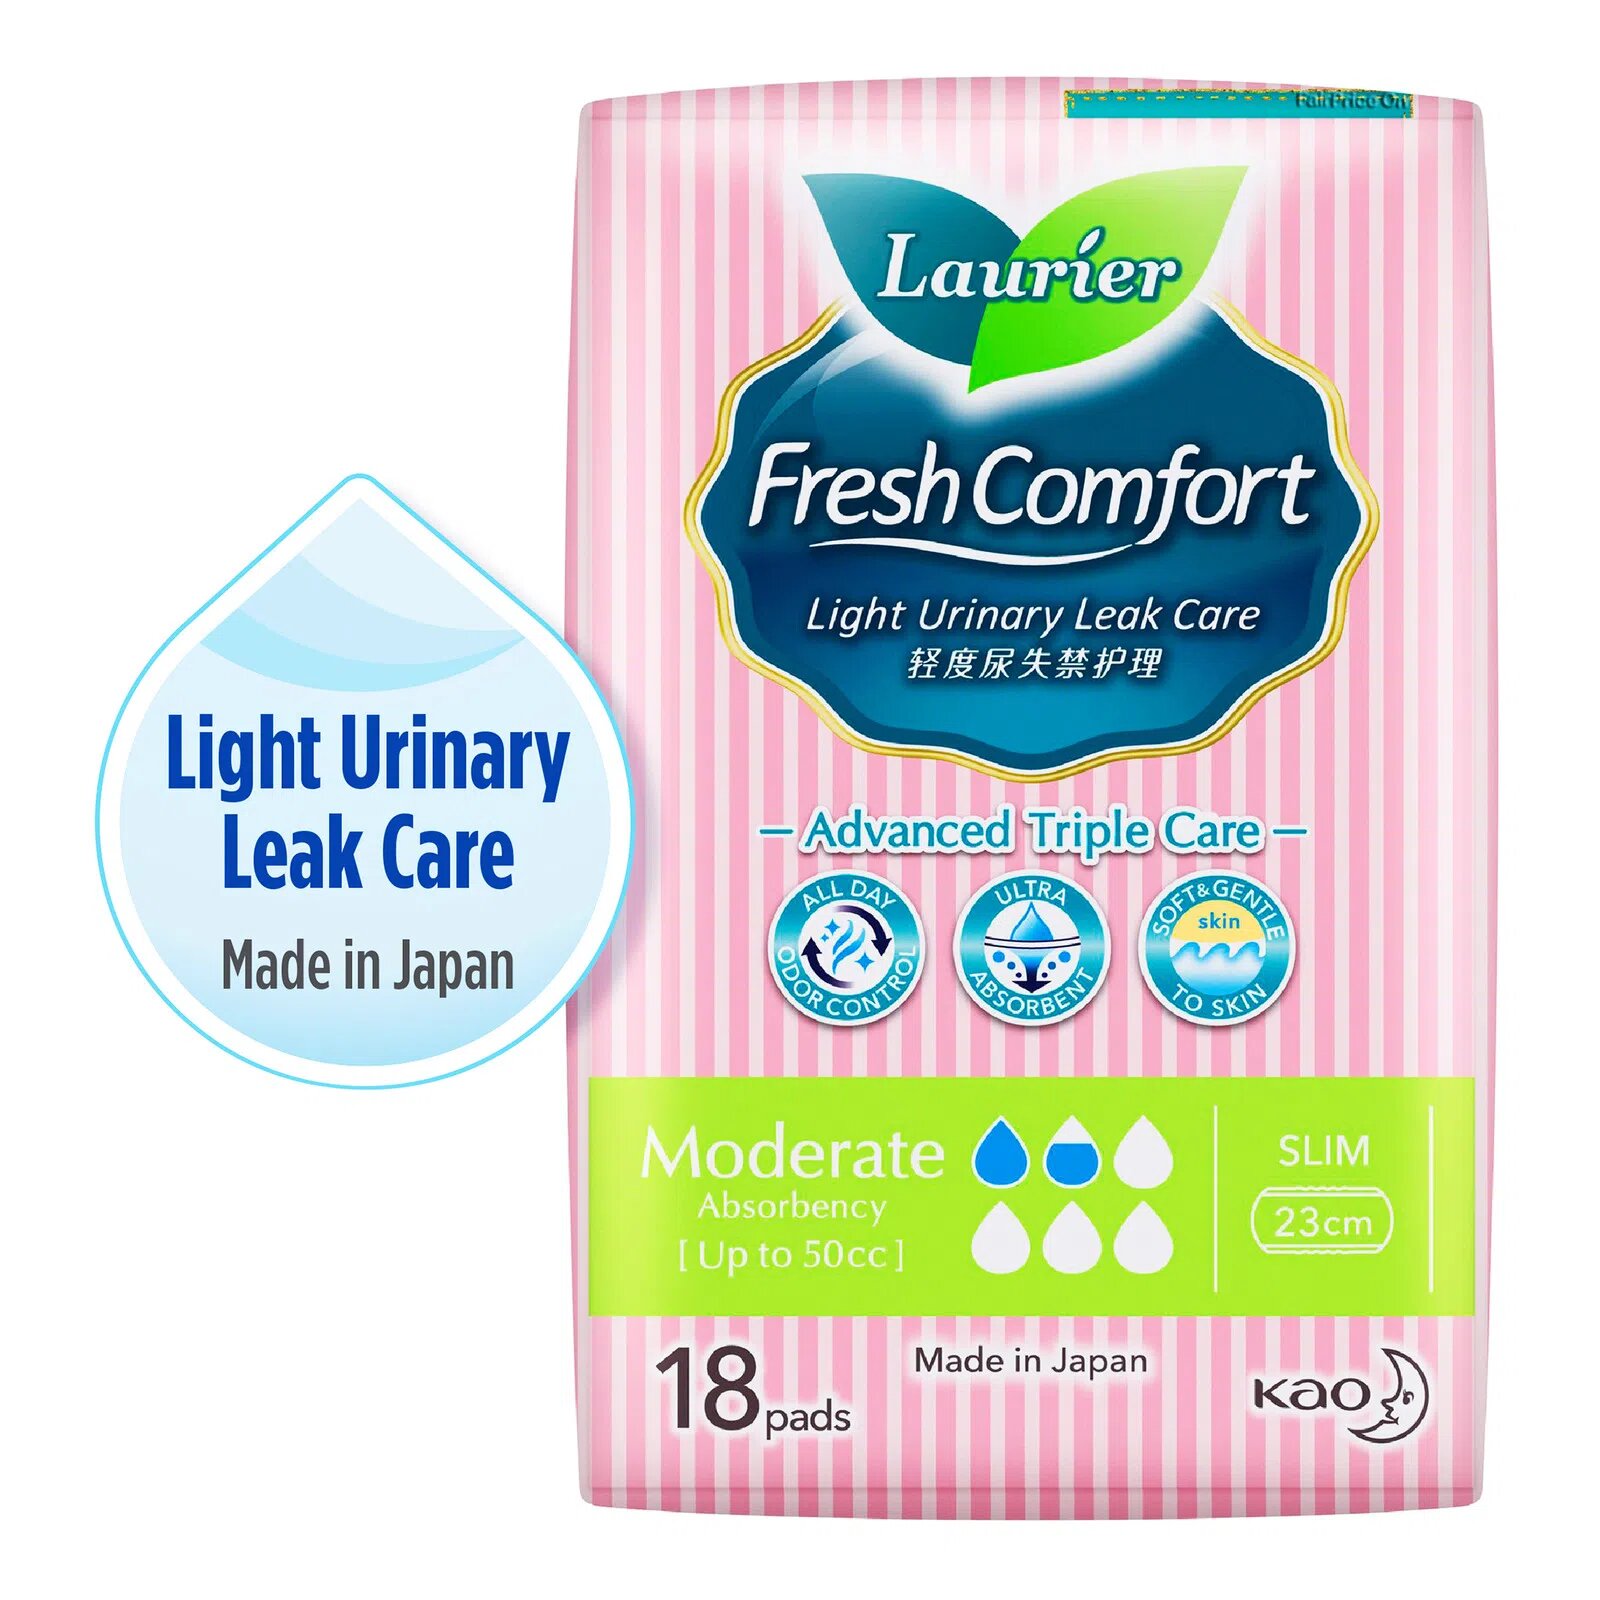 Laurier Fresh Comfort Light Urinary Leak Pads -50cc(23cm)